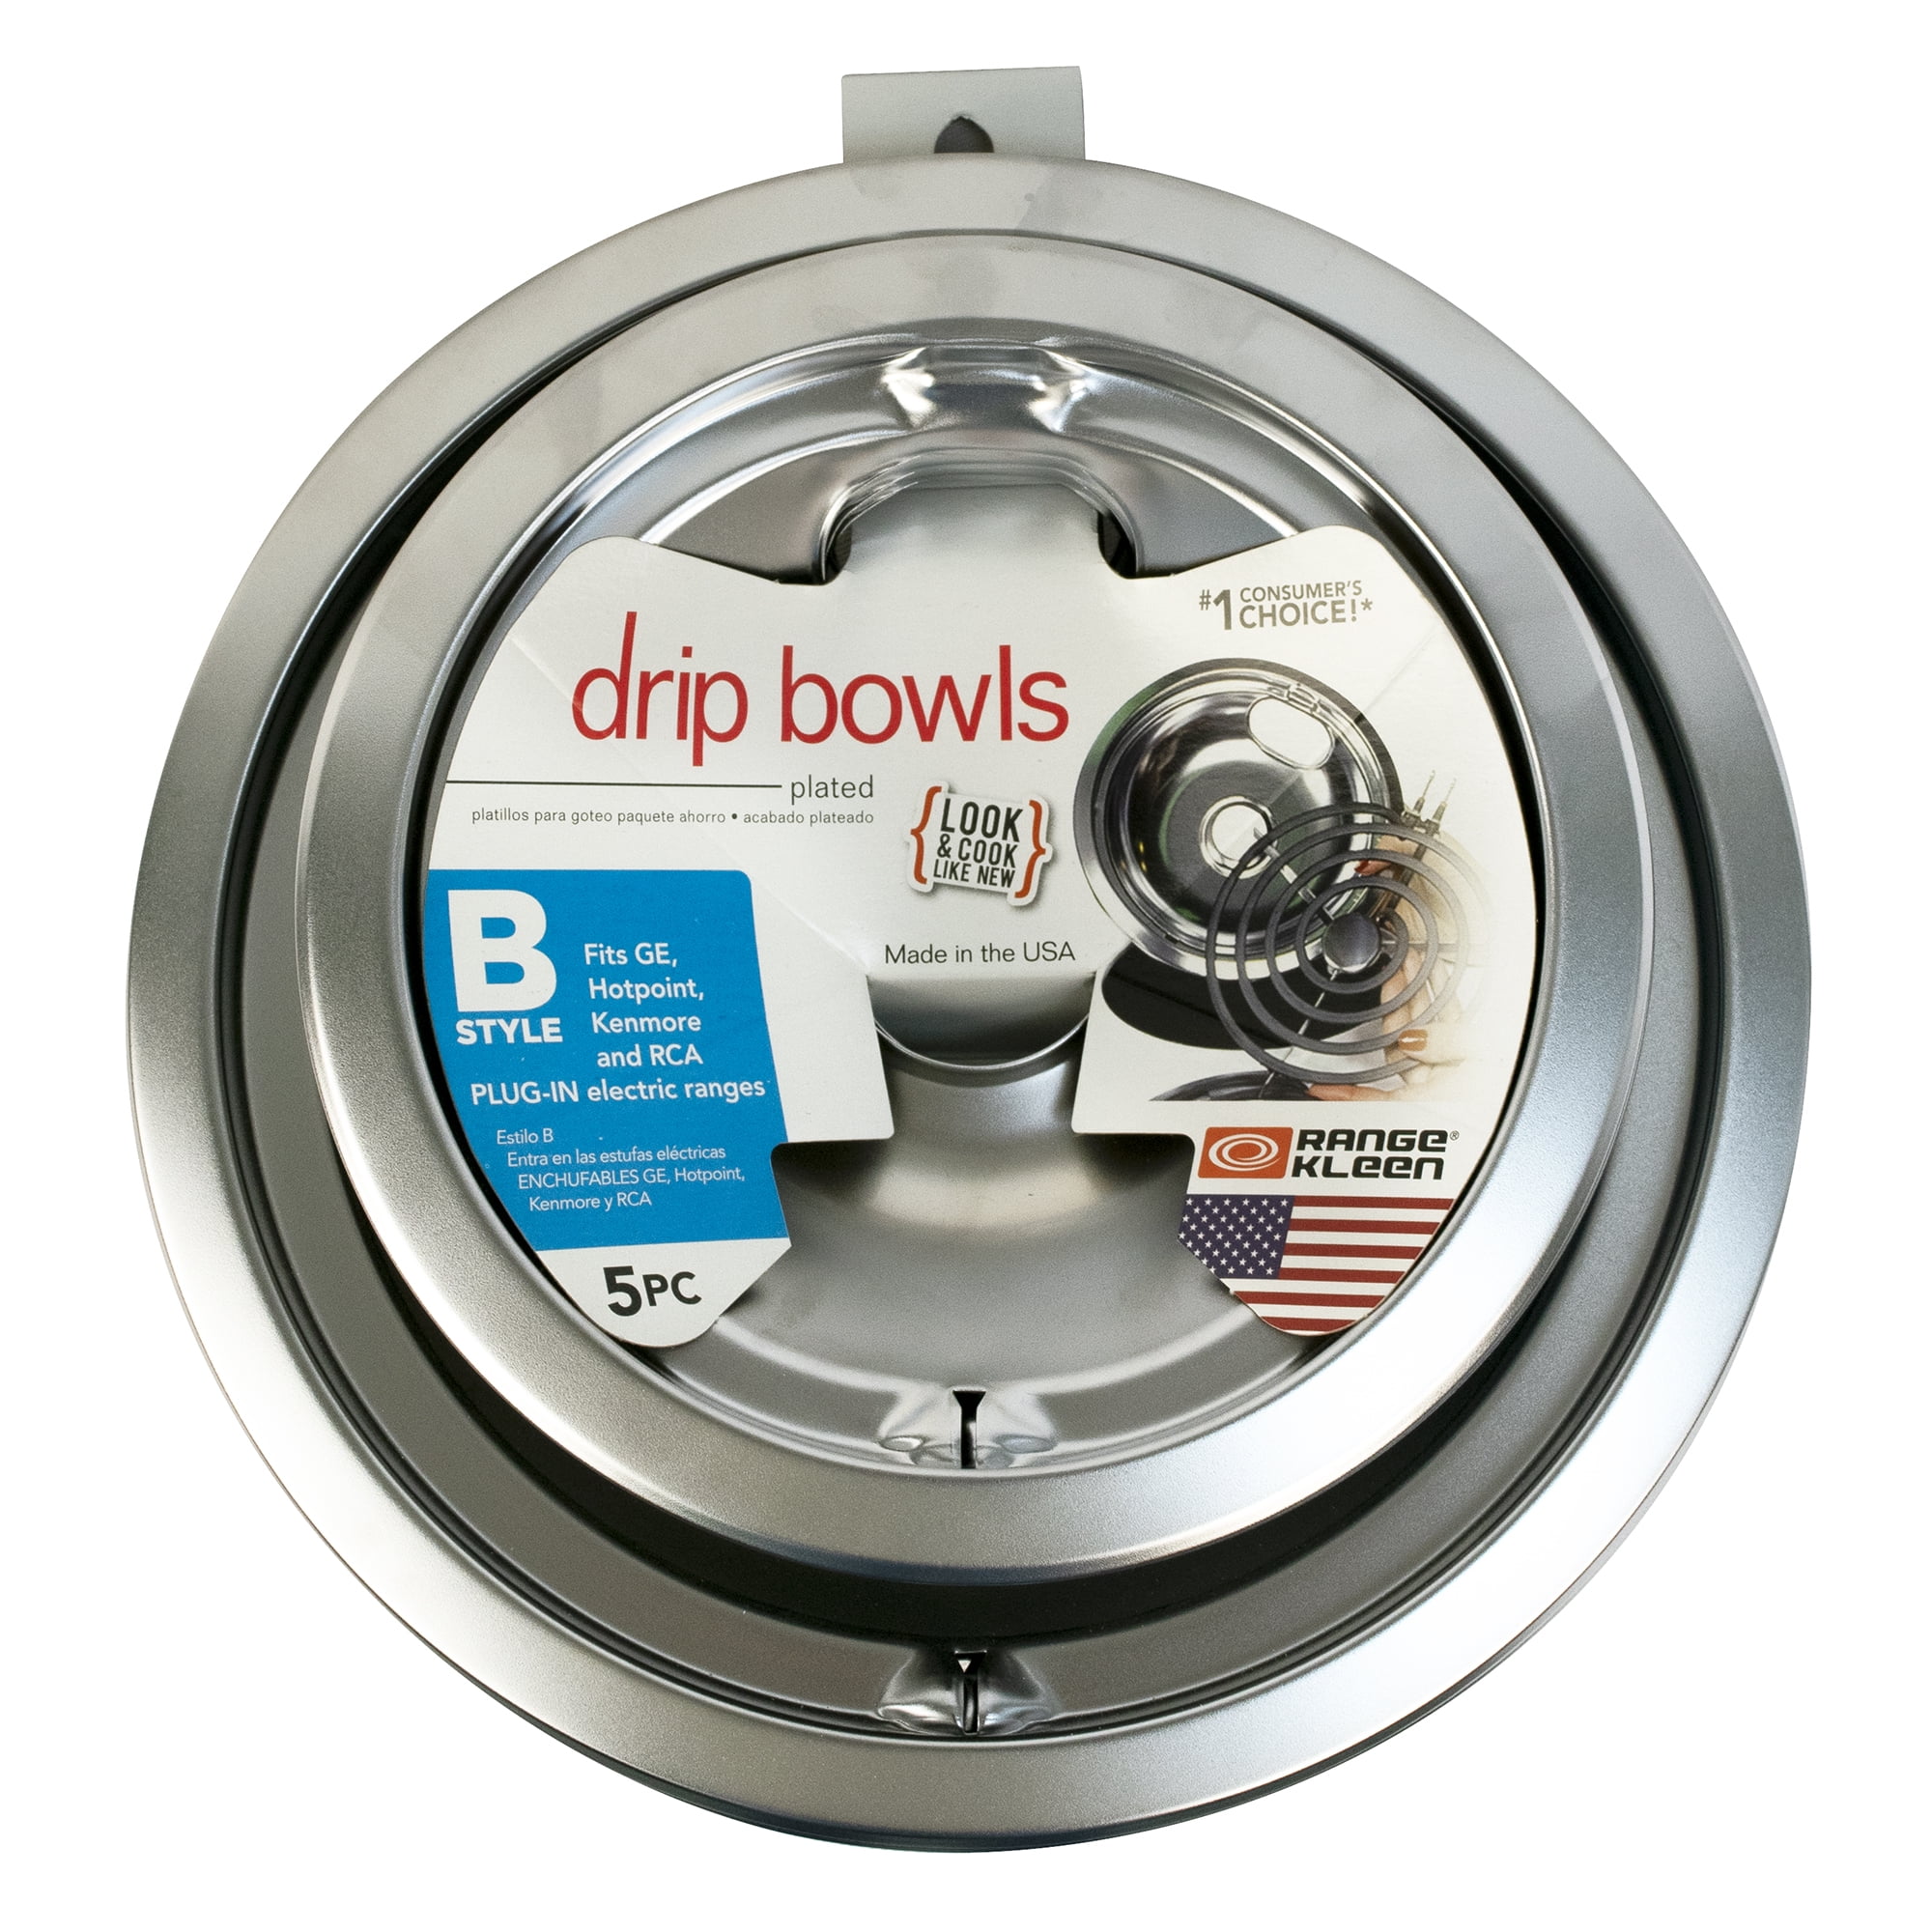 Range Kleen Style B Drip Bowl